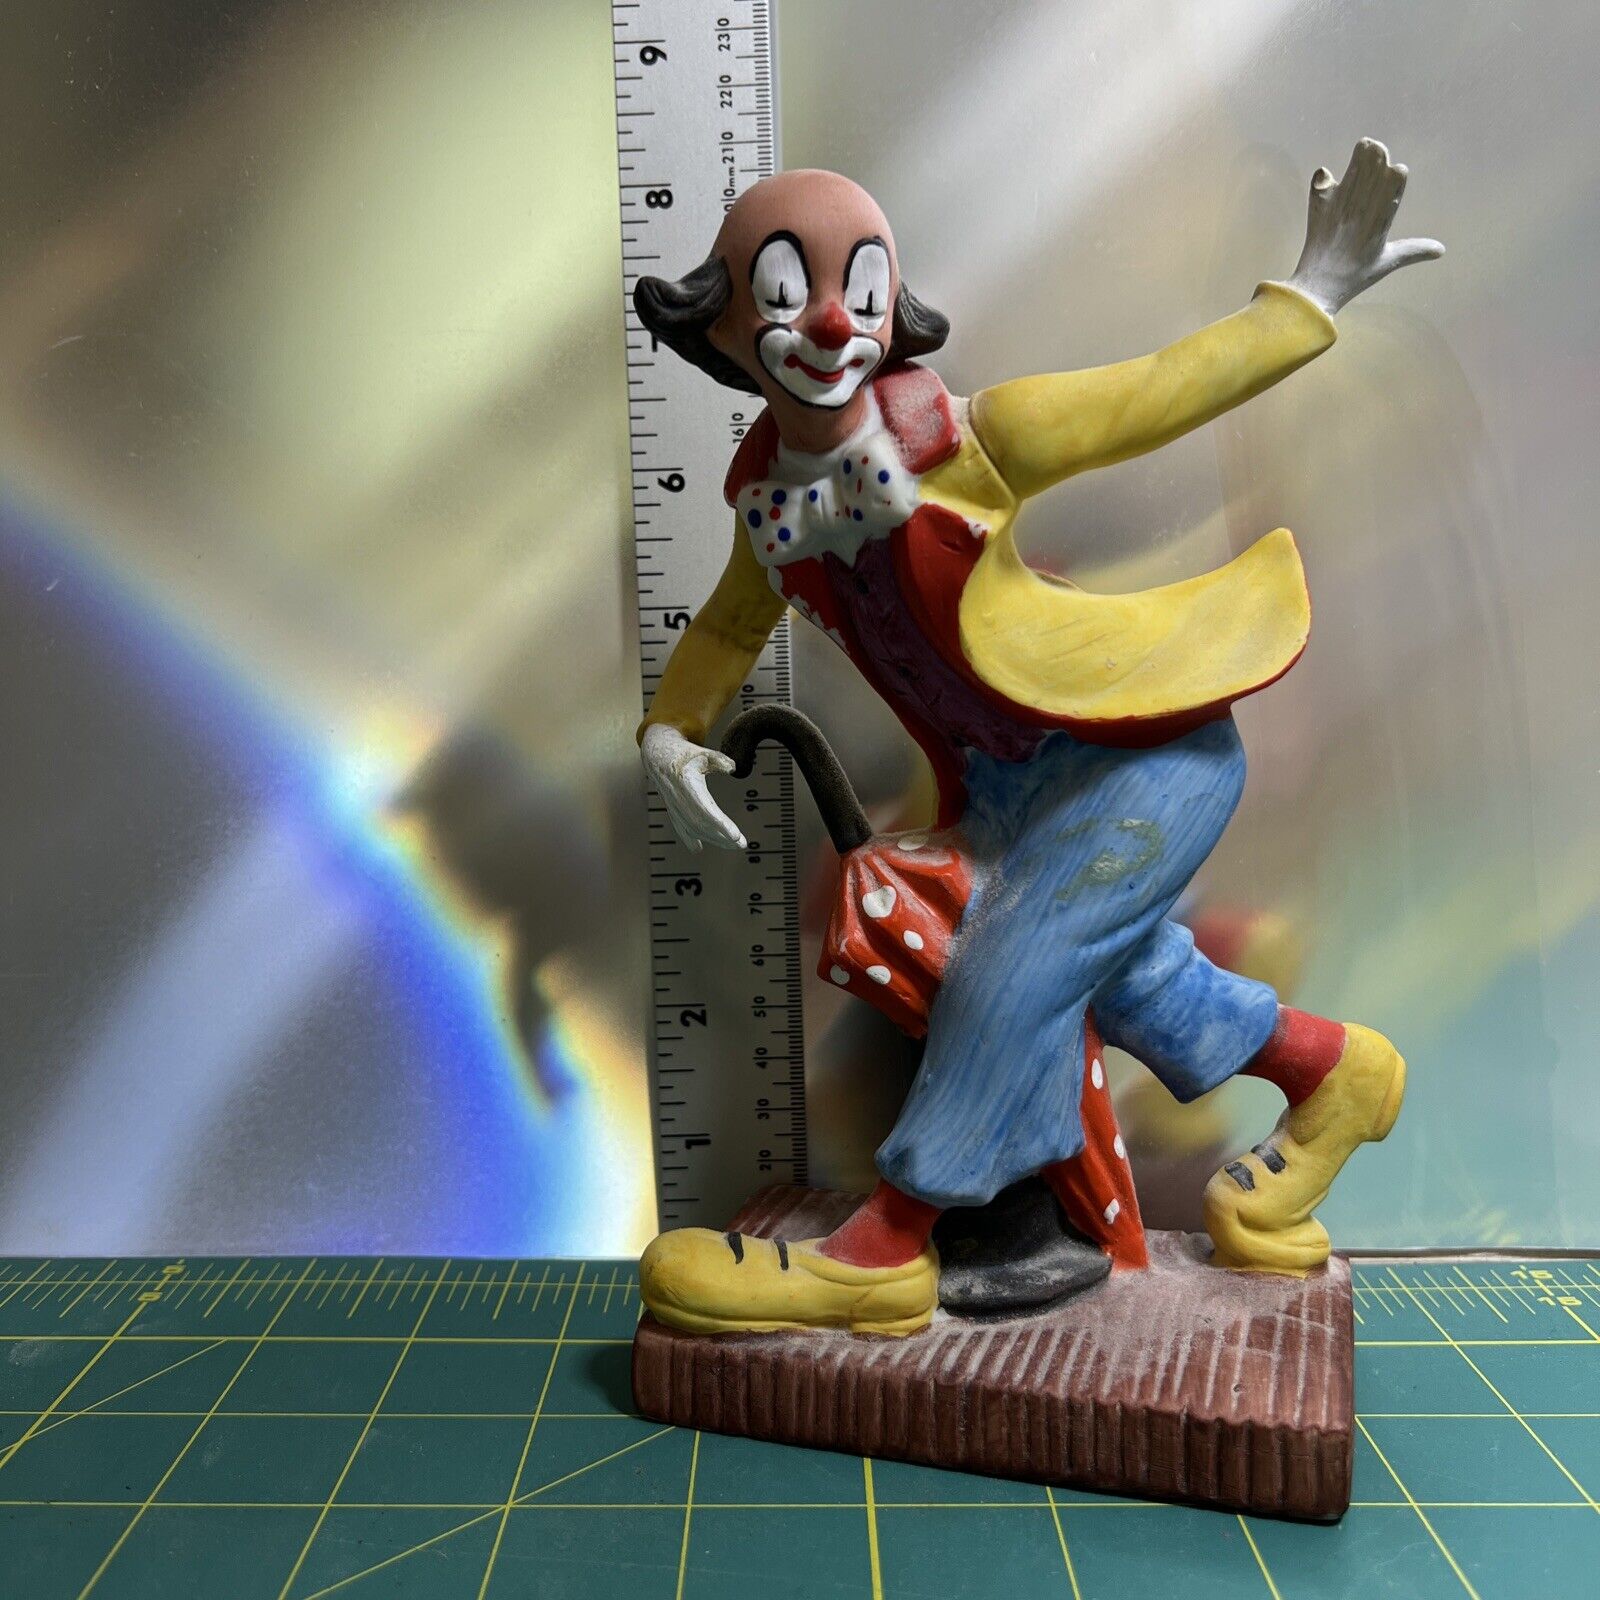 Vintage Porcelain Clown W/Umbrella Figurine Toscany Japan “The Clown Collection”